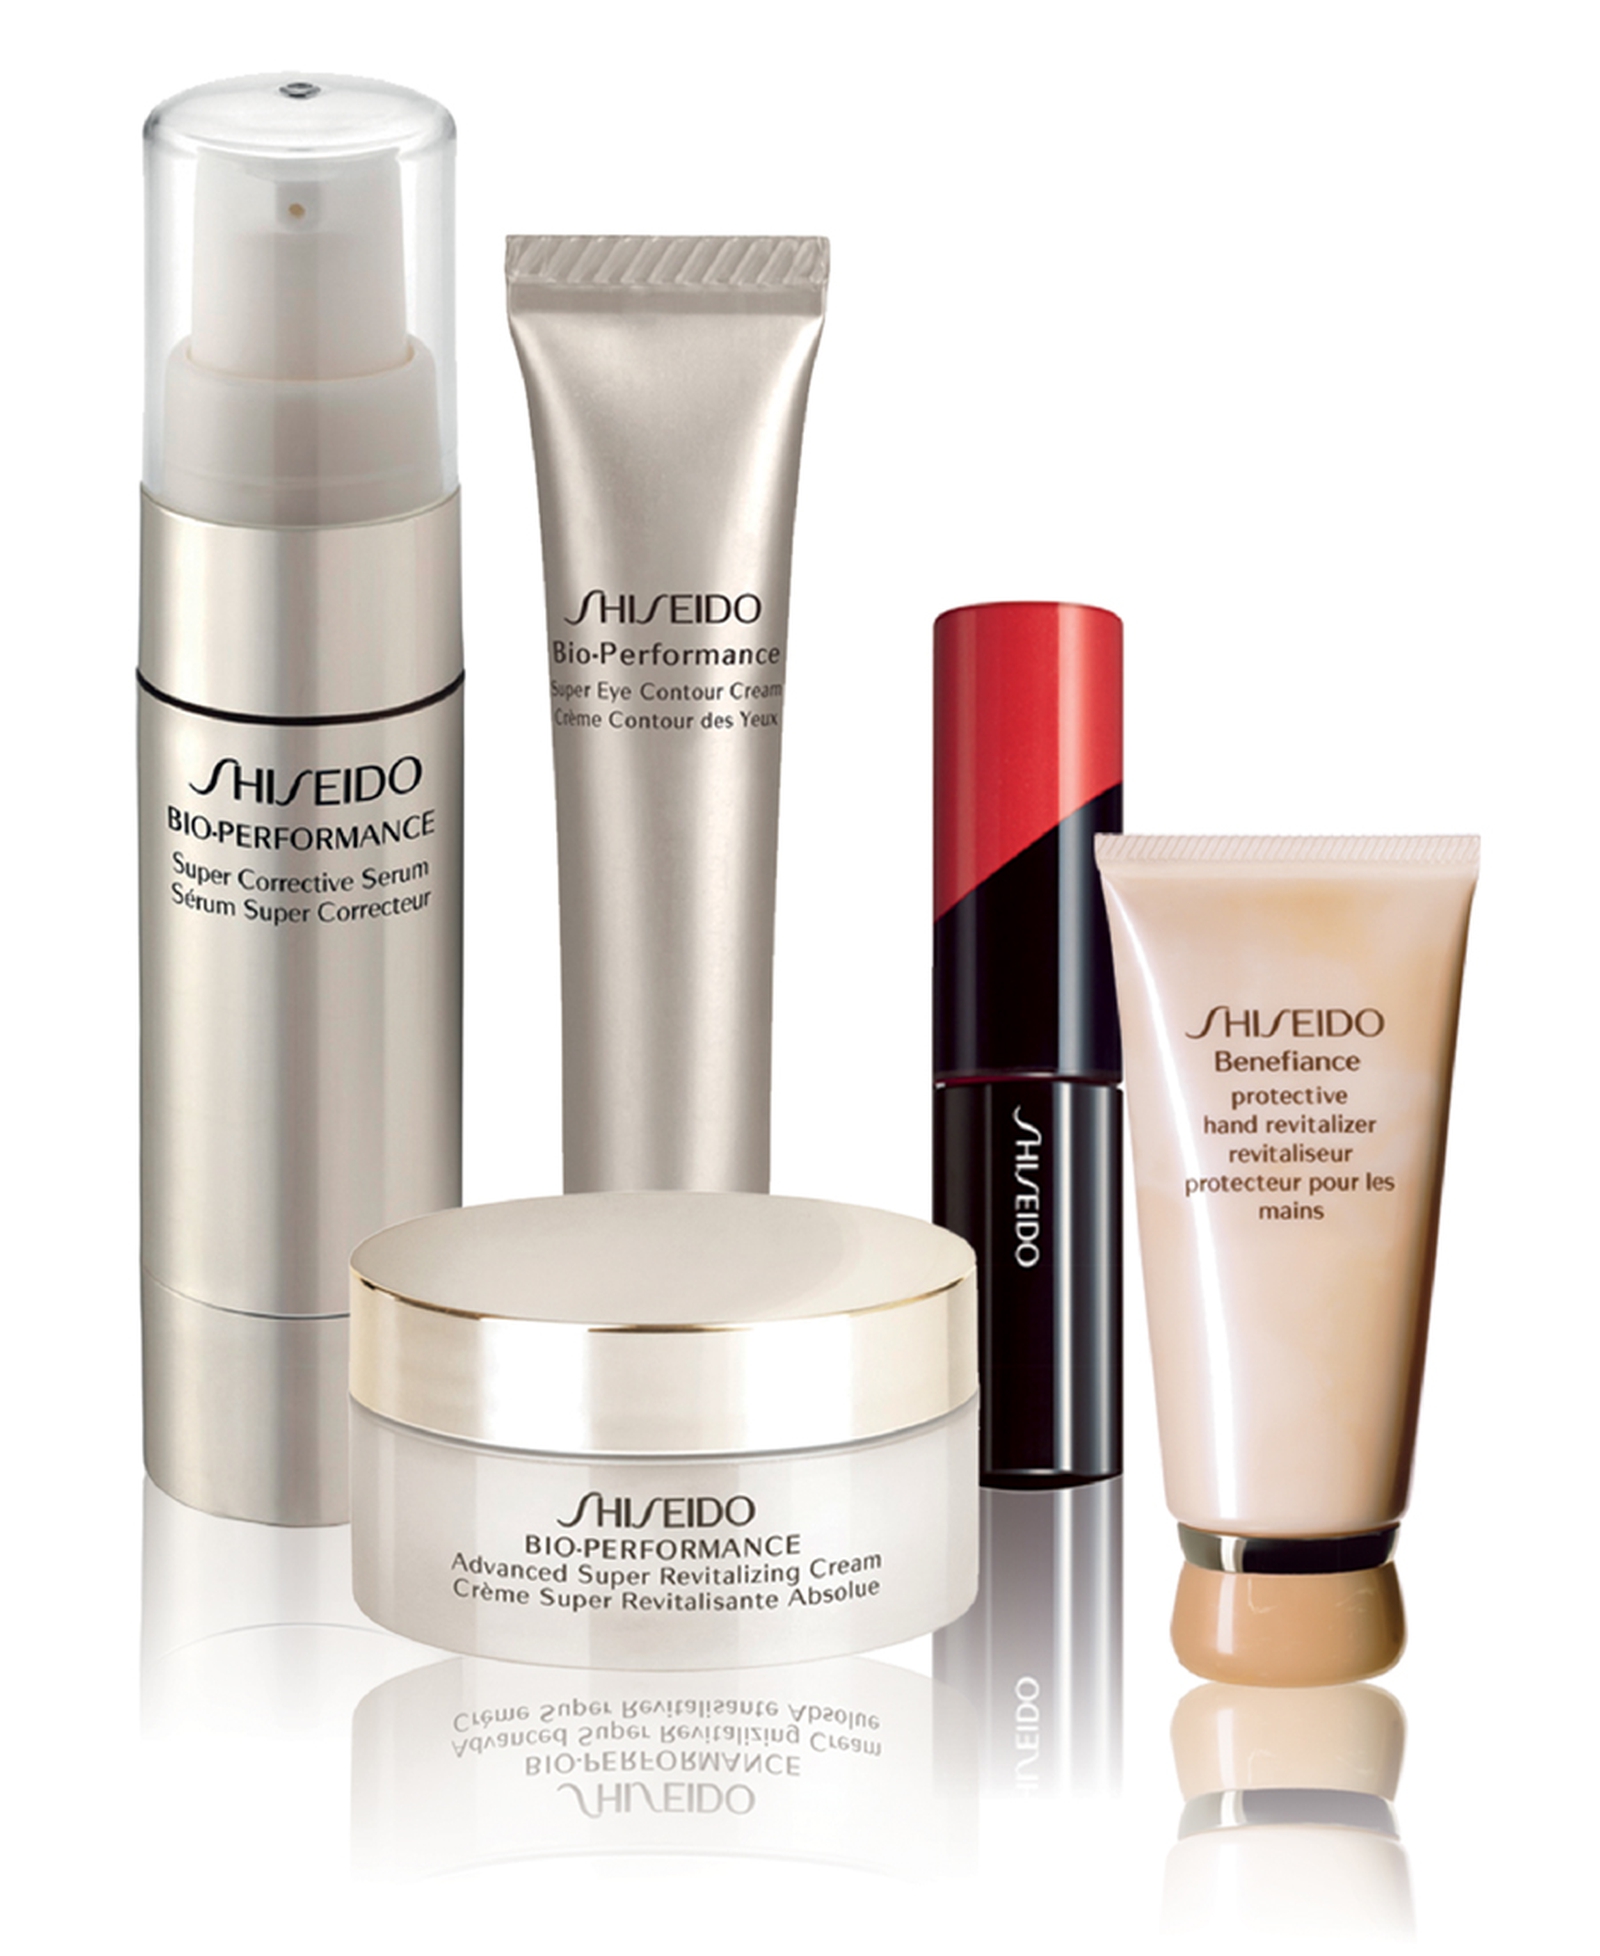 Amazing Shiseido Gift With Purchase launches